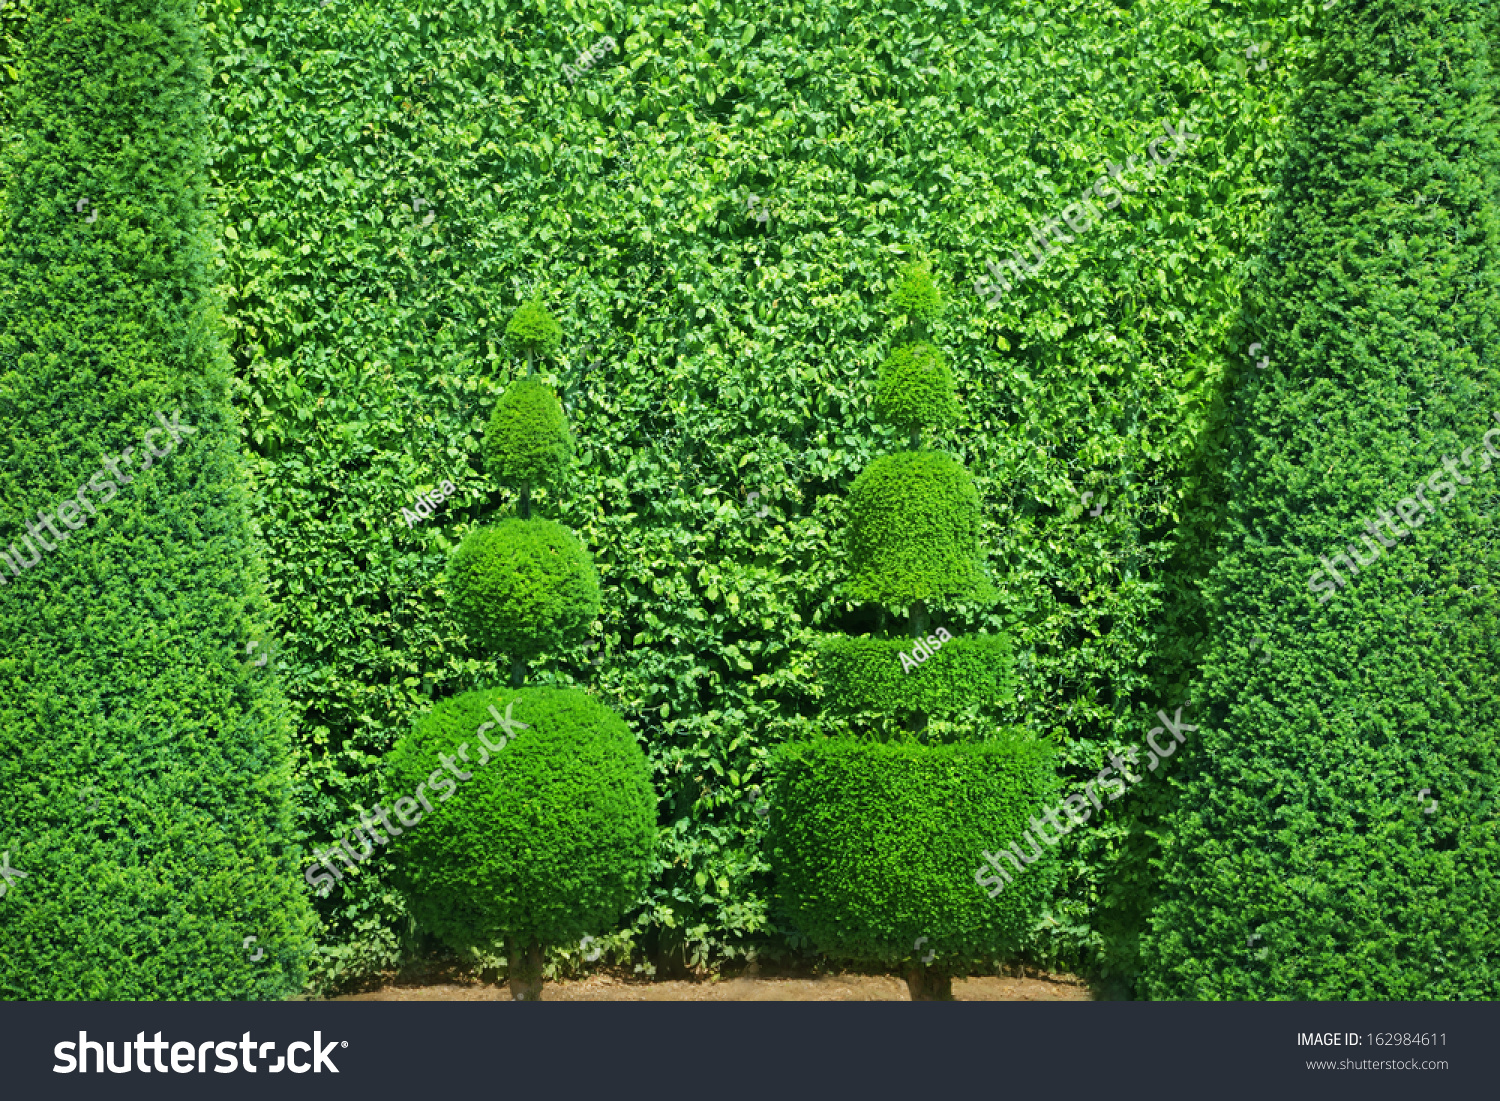 Topiary Trees Stock Photo 162984611 - Shutterstock